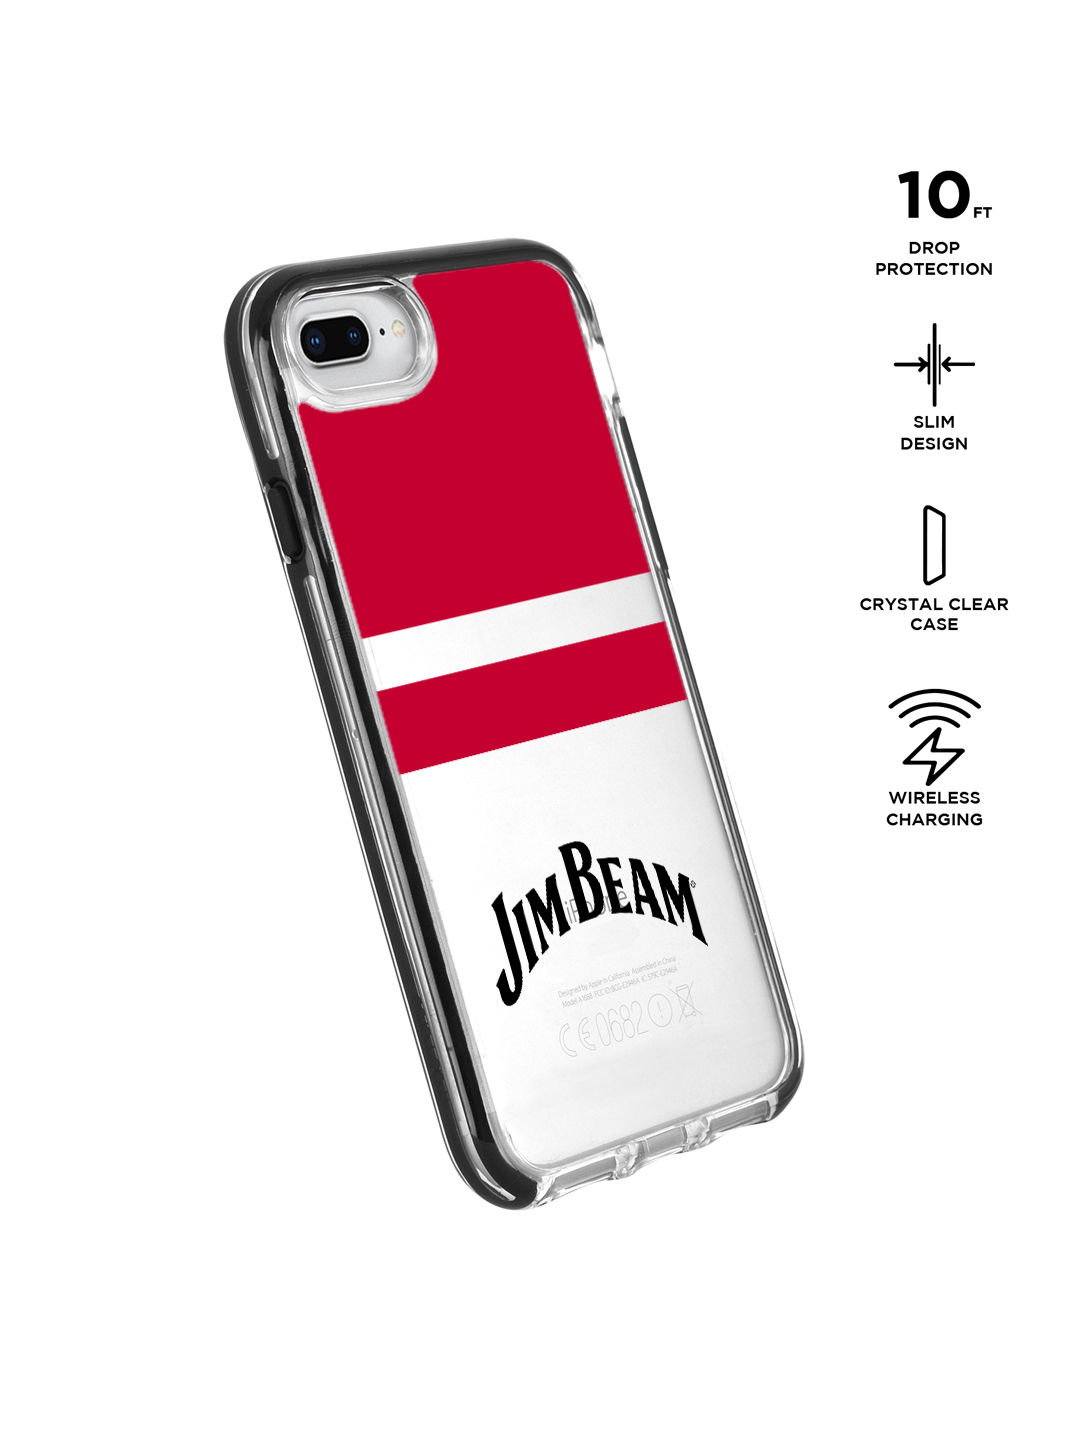 Jim Beam White Stripes - Shield Case for iPhone 8 Plus